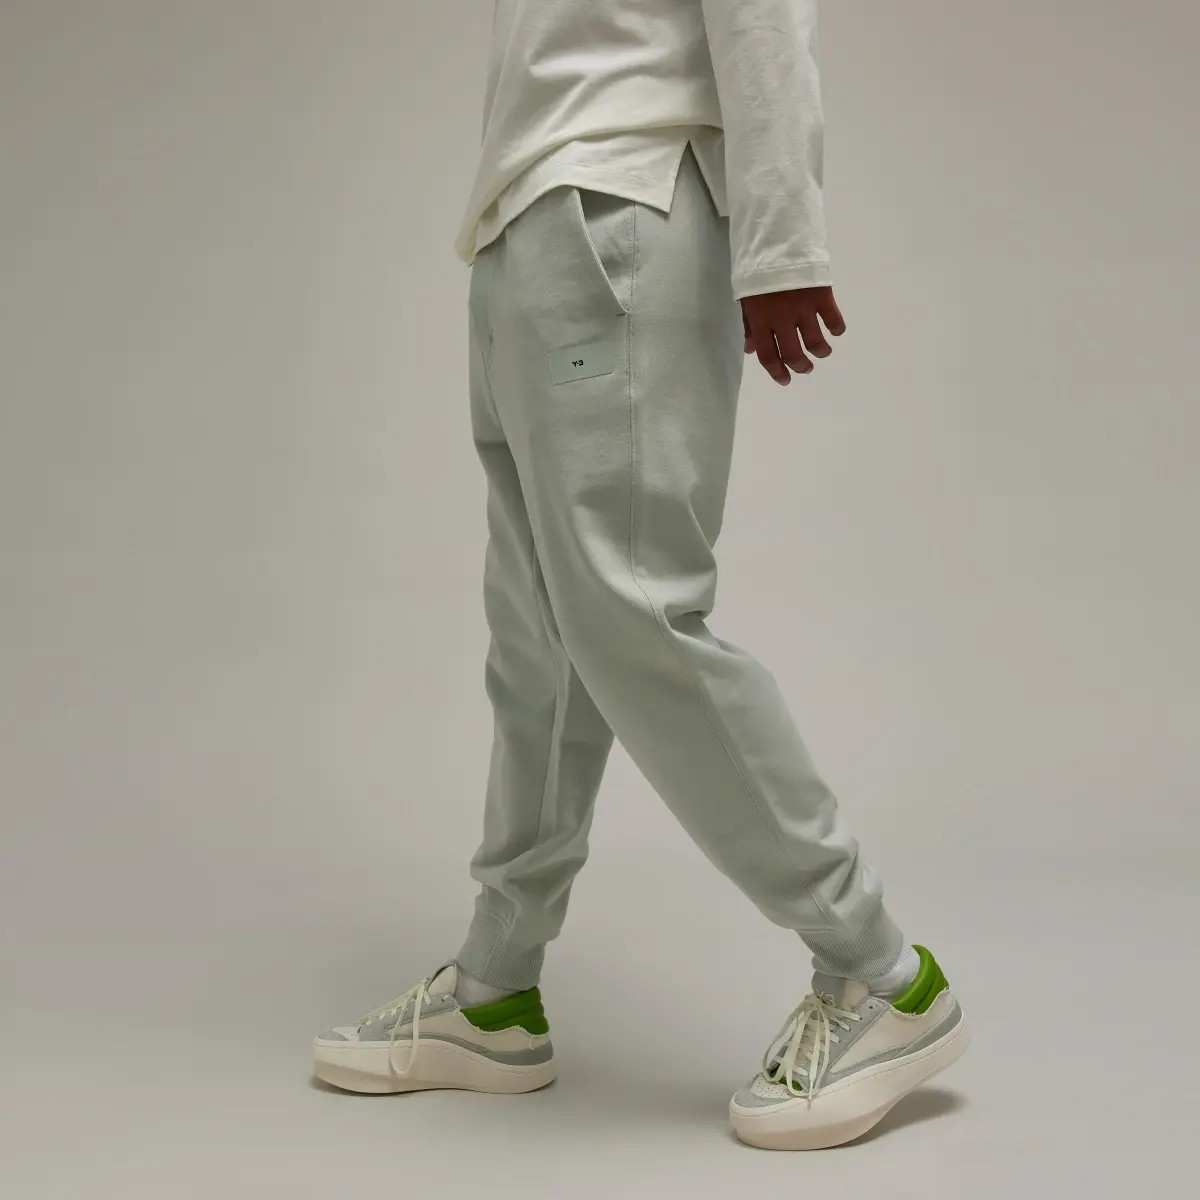 Adidas Y-3 Organic Cotton Terry Cuffed Pants. 2